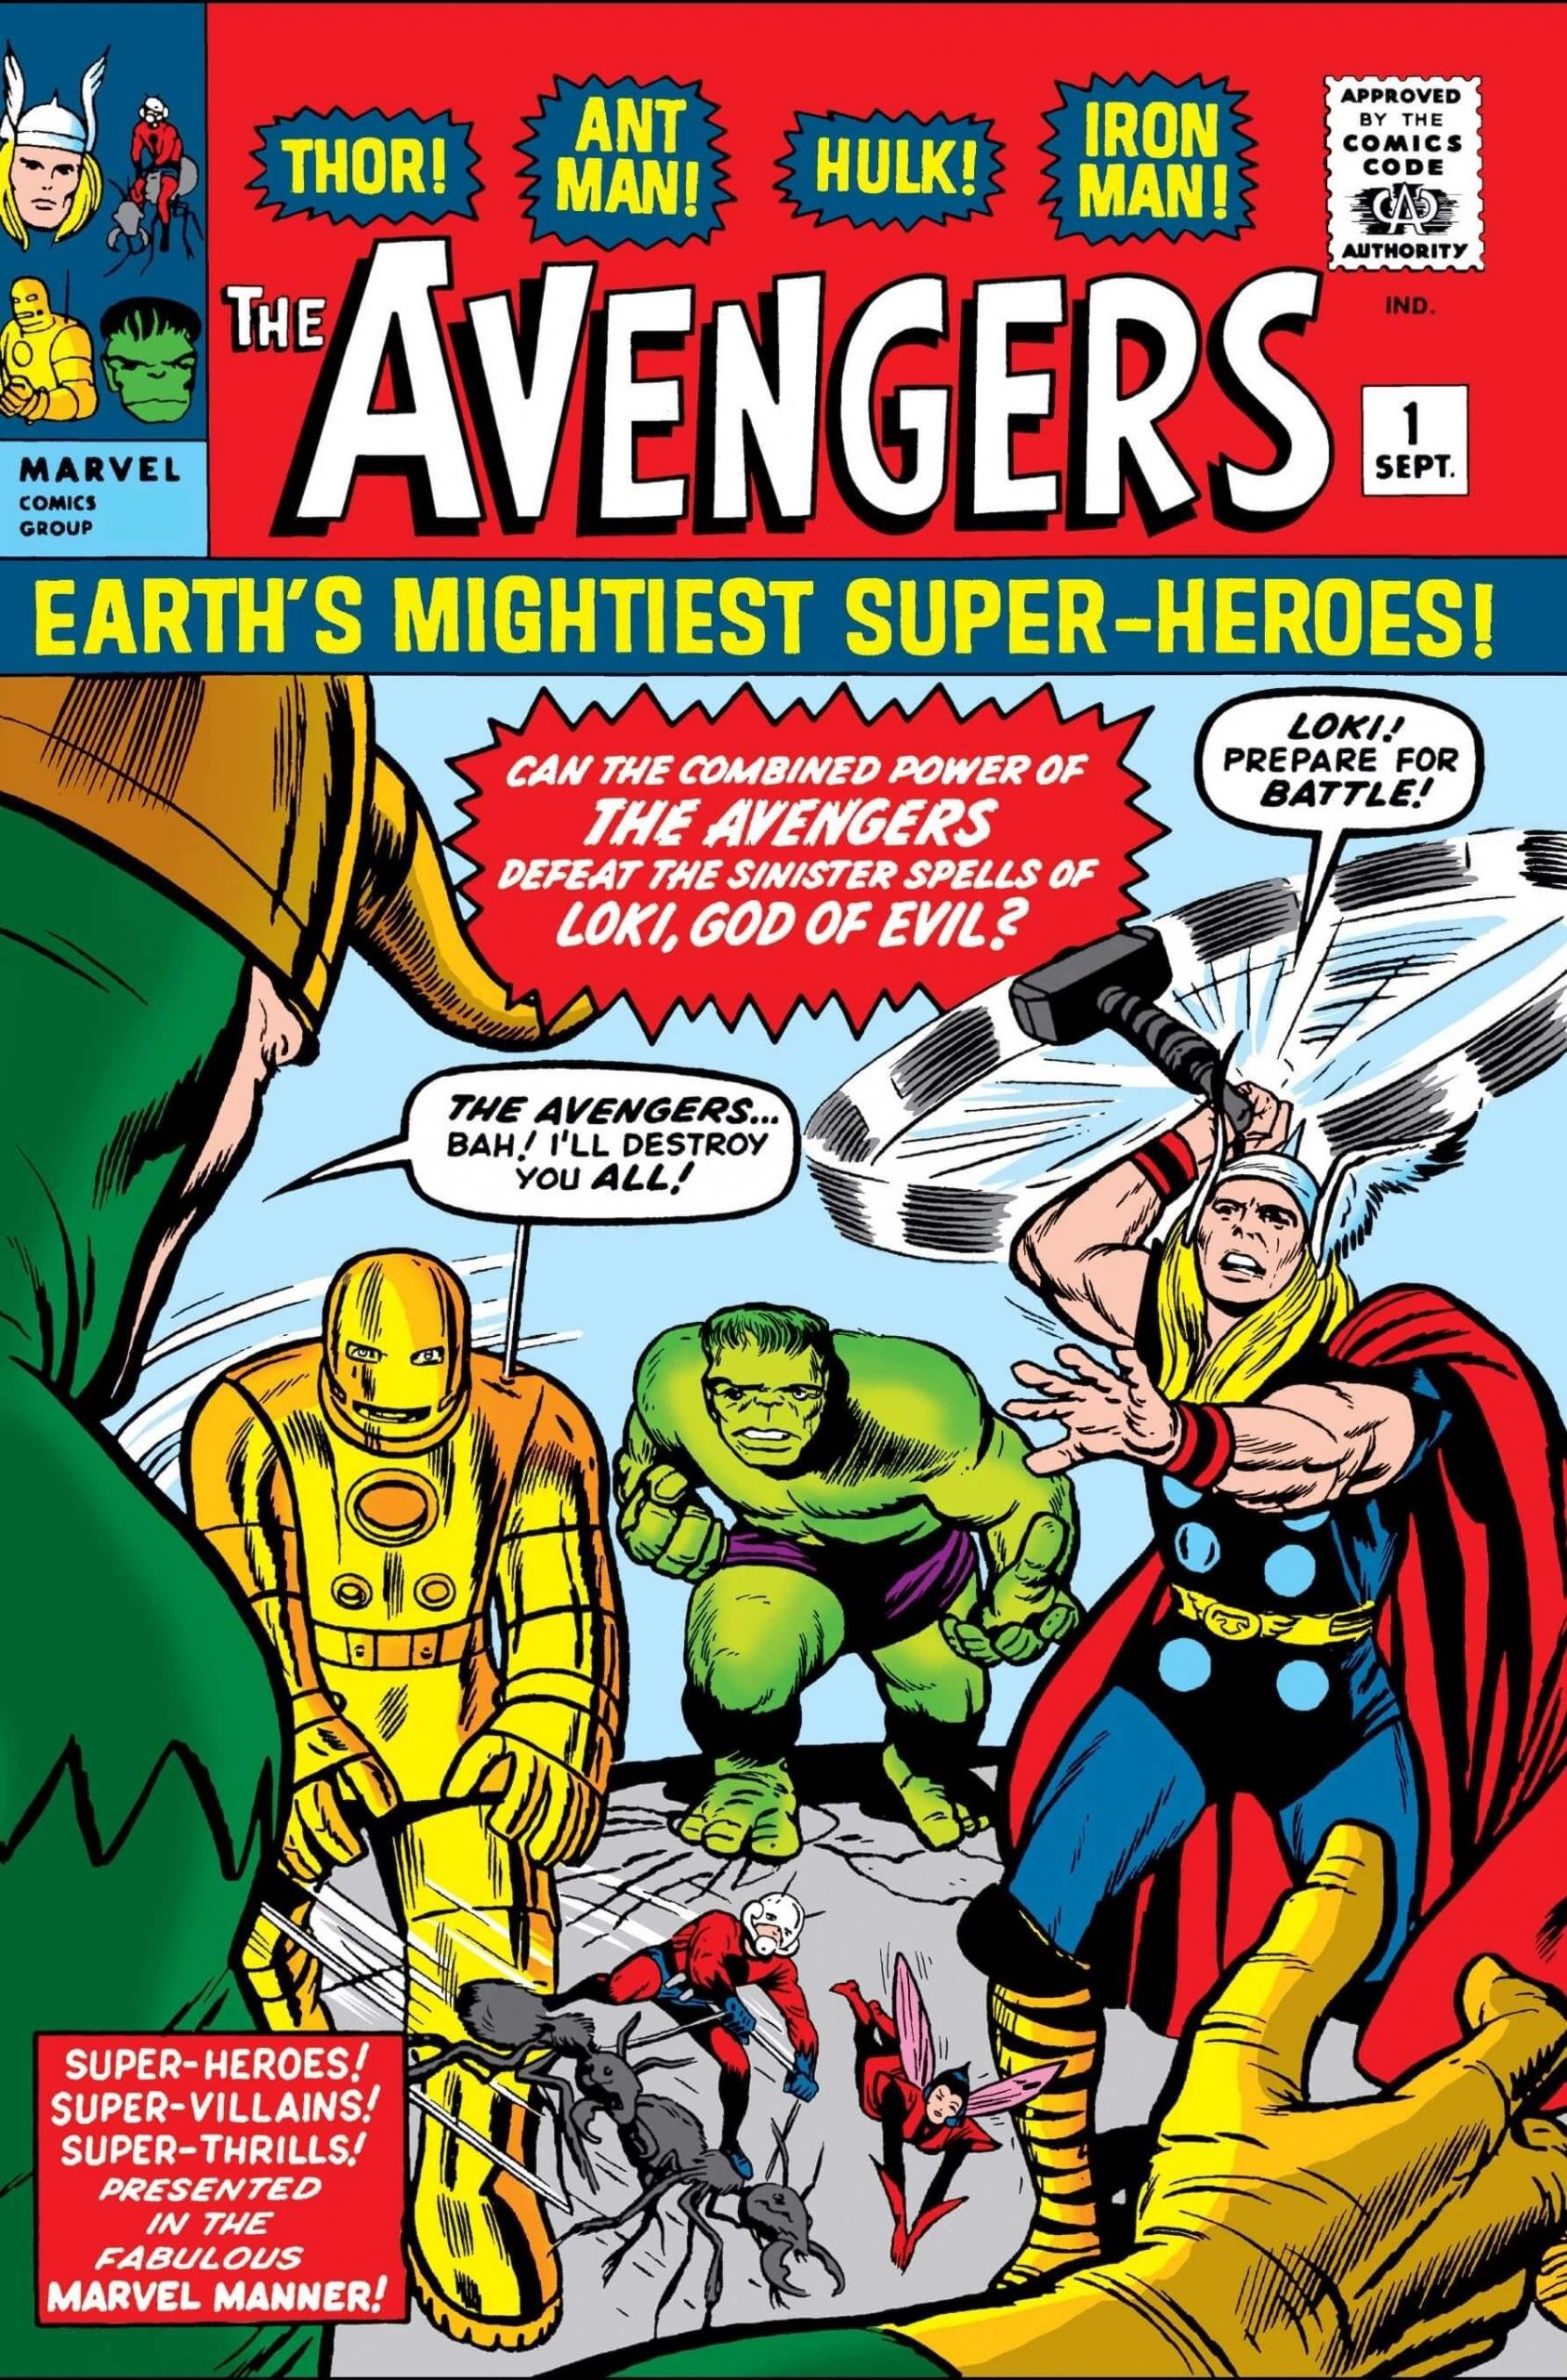 Cover di Avengers 1 del 1963 di Jack Kirby